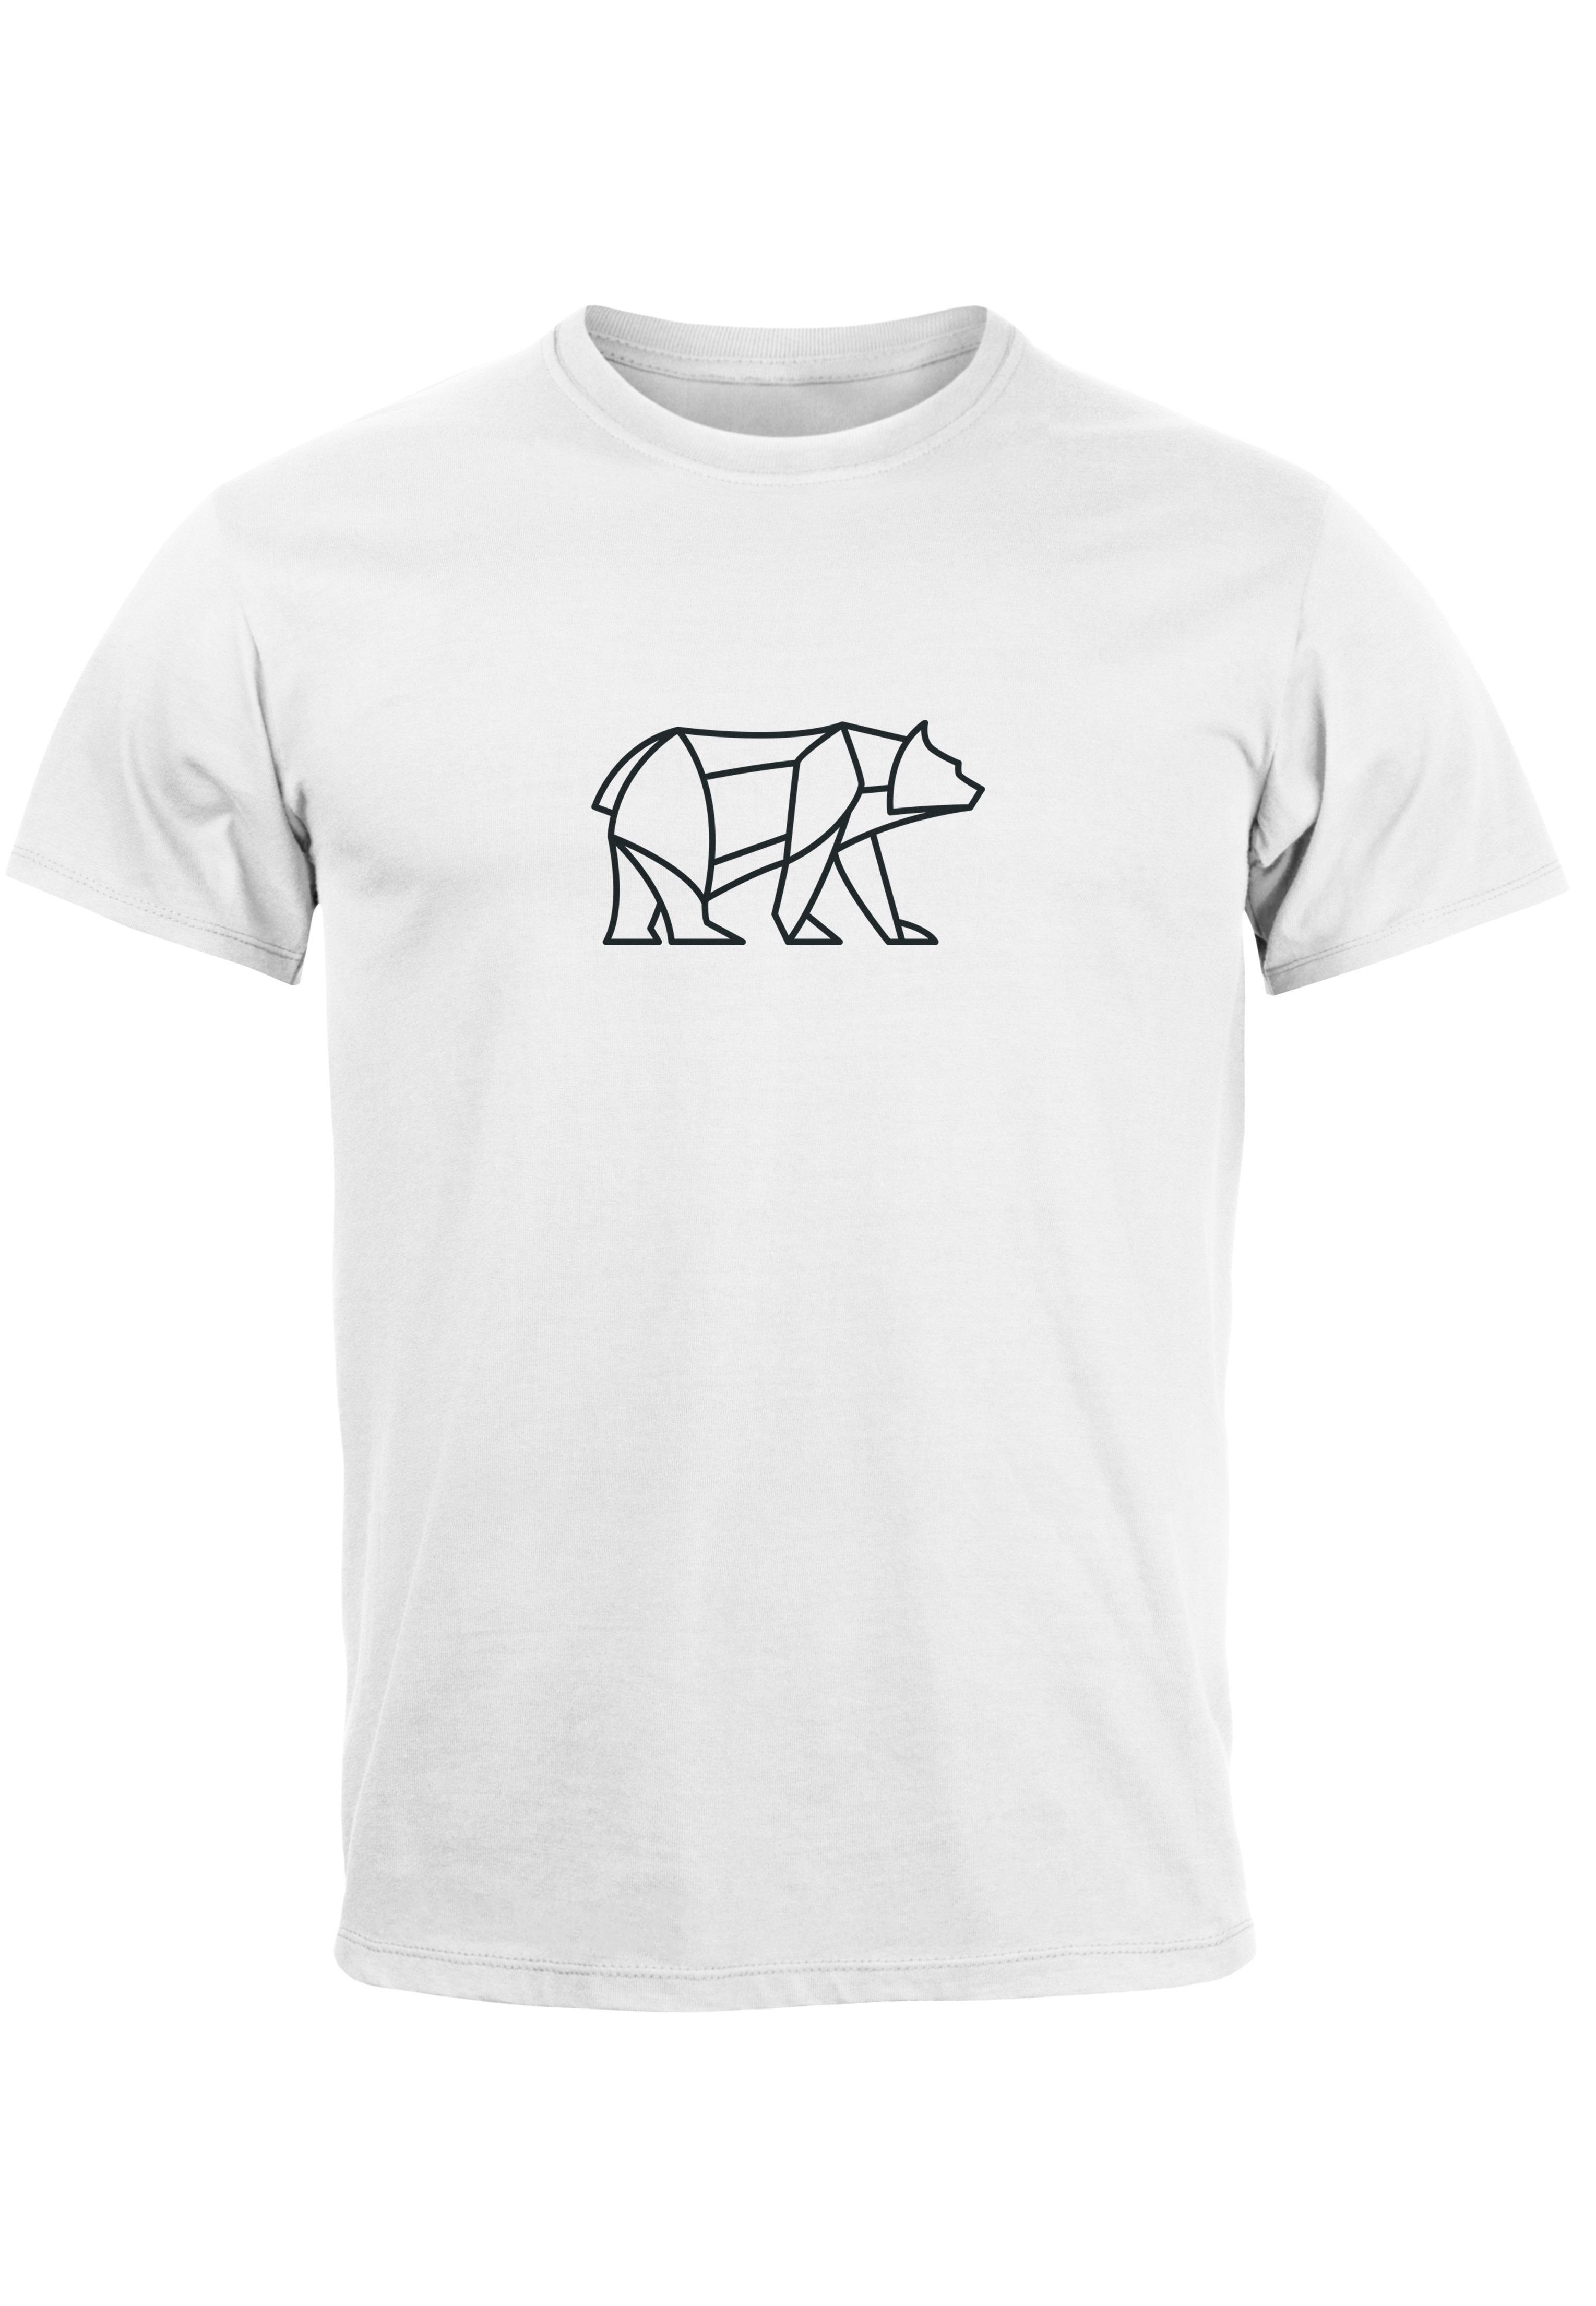 Outdoor Polygon Tiermotiv Bär mit Design Neverless Print-Shirt Polygon Bear 2 Herren Print T-Shirt weiß Print Fashion